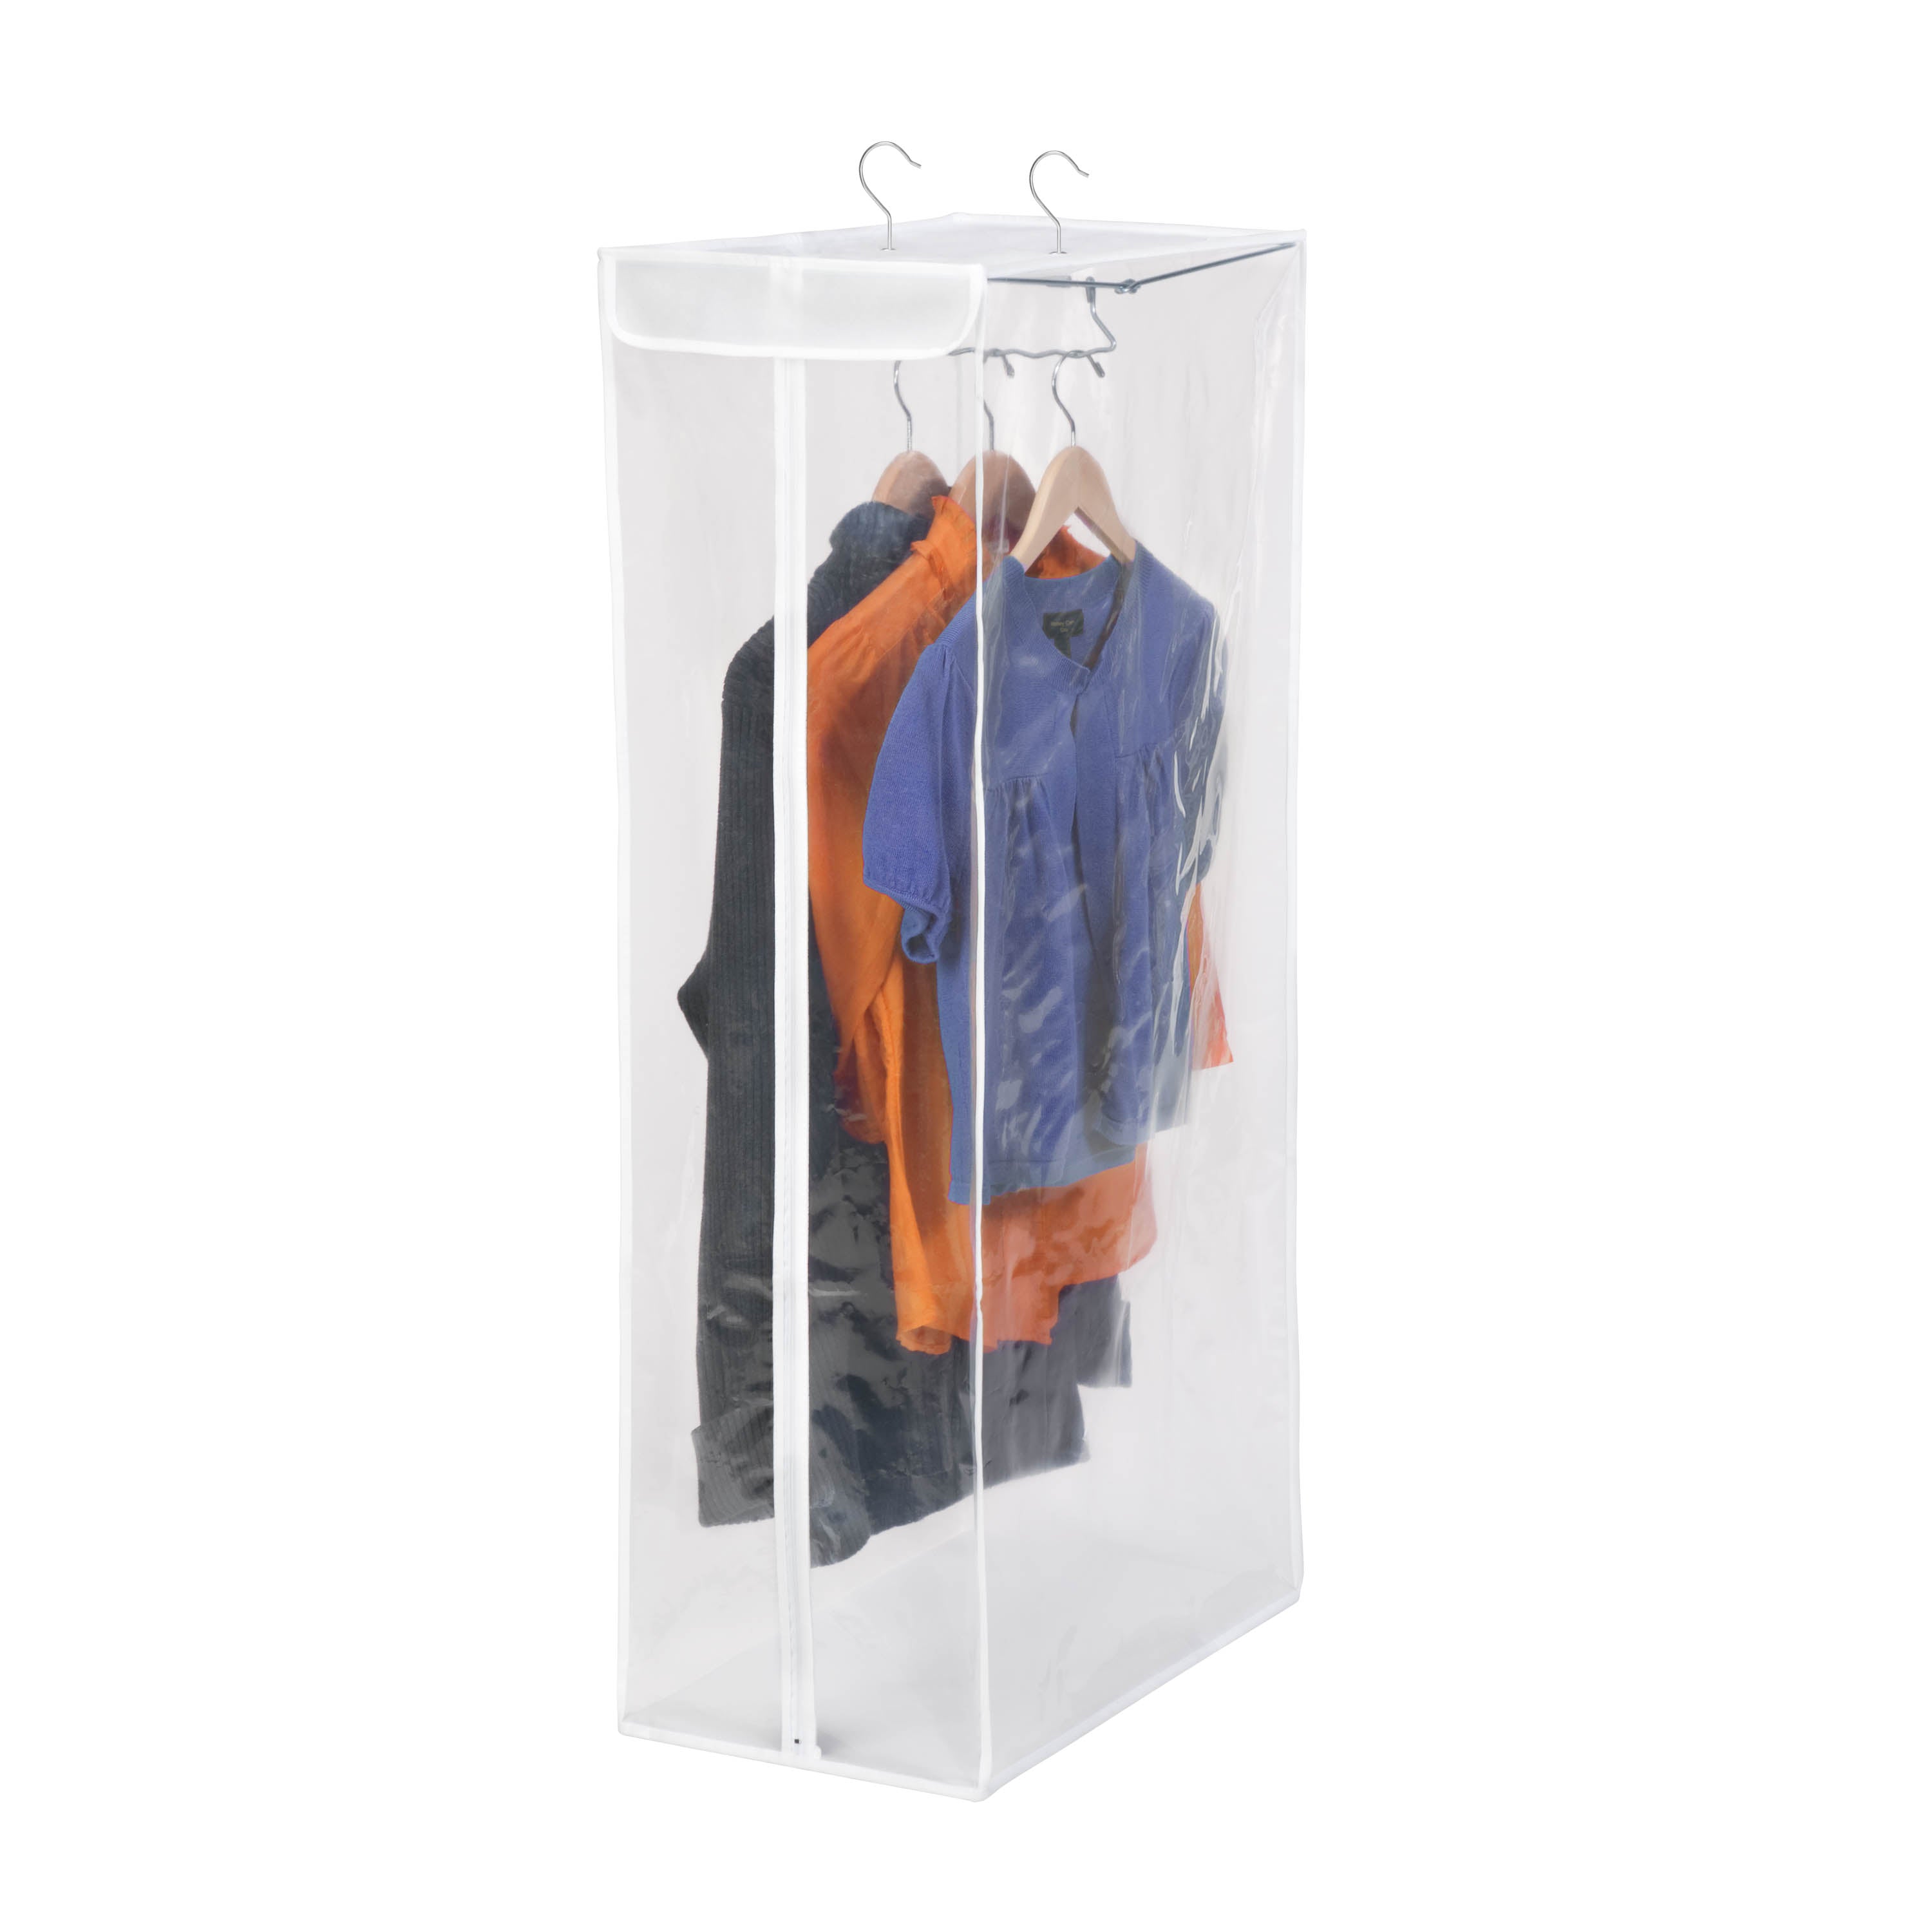 20 PACK Large Hanging Vacuum Space Saver Closet Storage Bag Clothes Dress  Suits